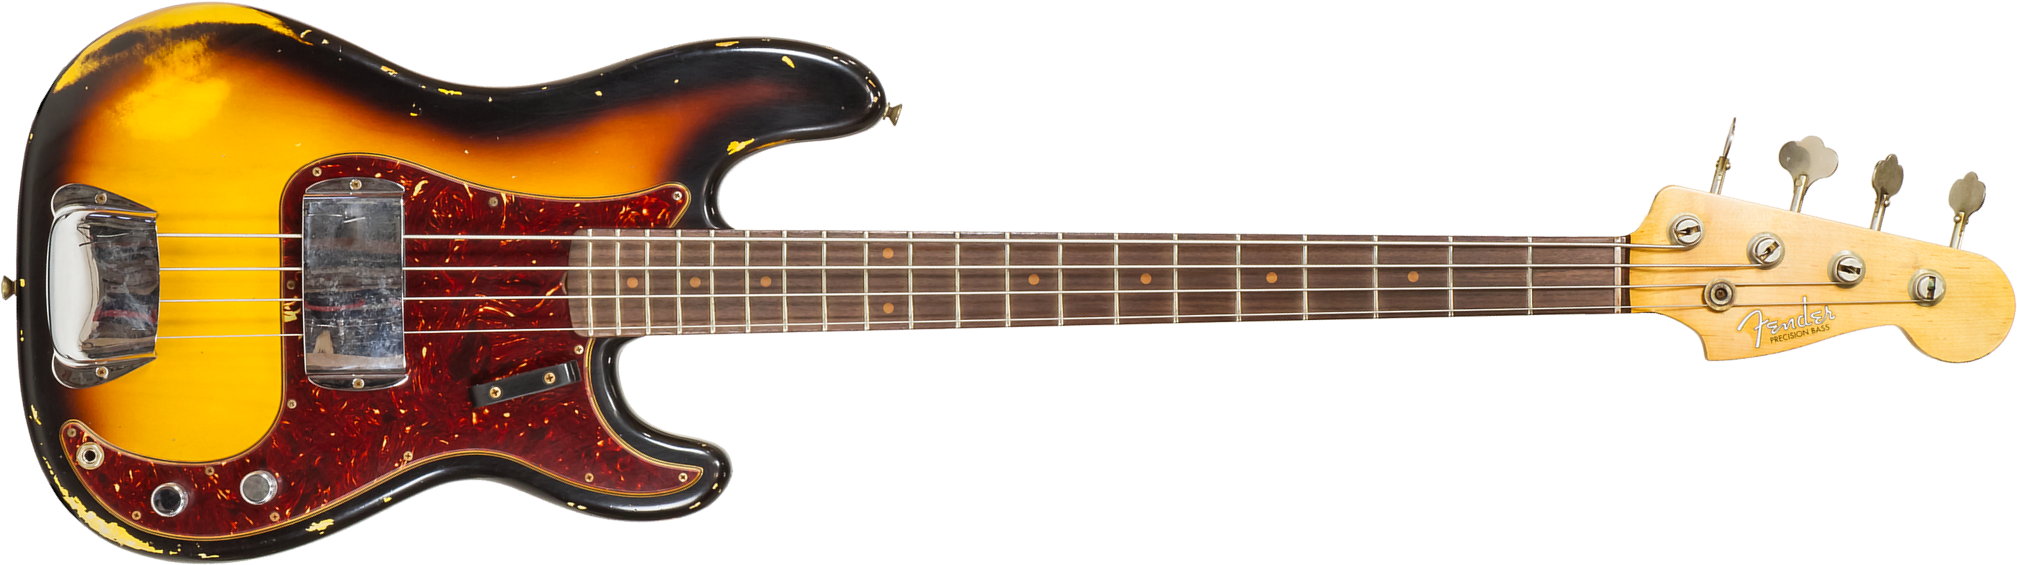 Fender Custom Shop Precision Bass 1963 Rw #cz560028 - Heavy Relic Aged 3-color Sunburst - Solidbody E-bass - Main picture